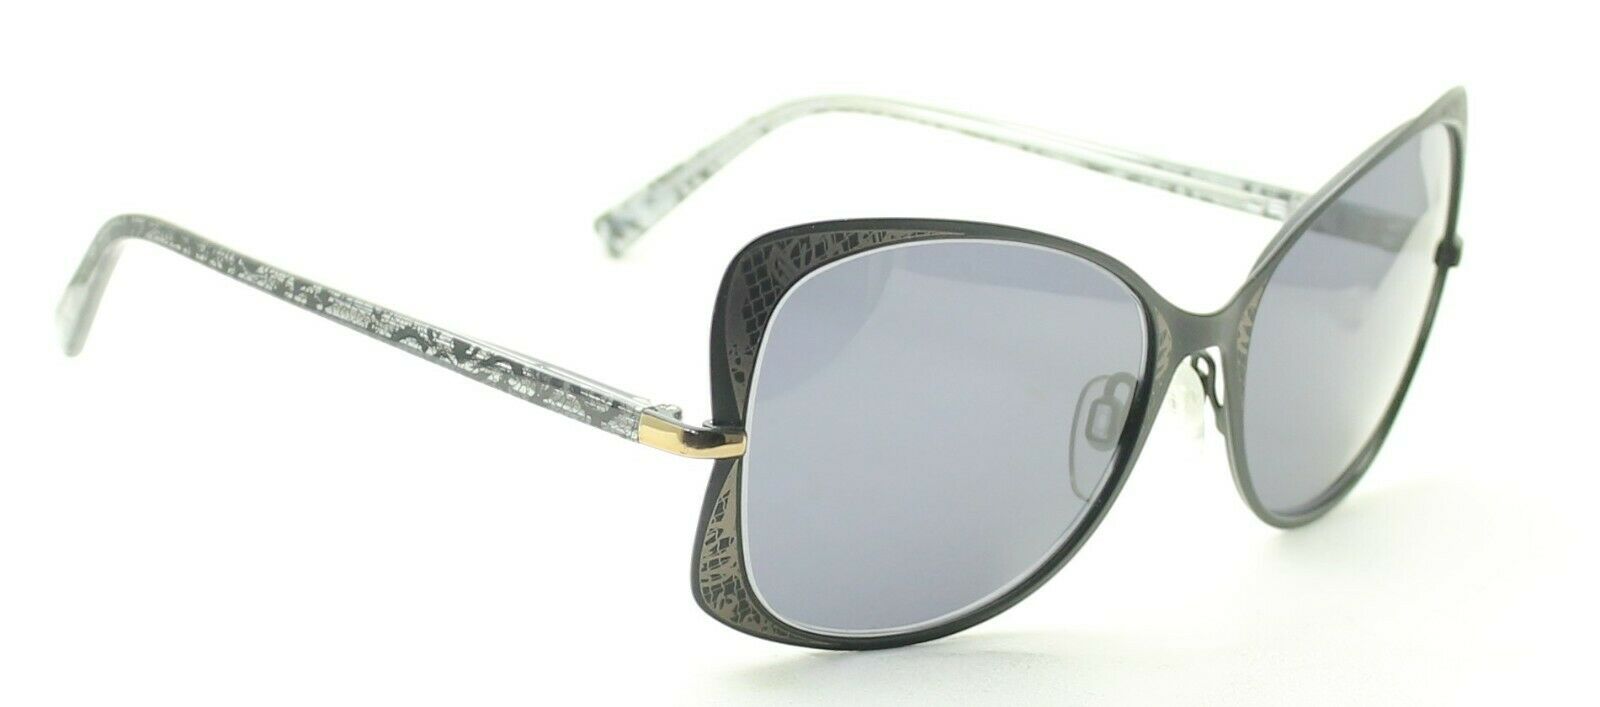 OSIRIS Flora Sun Rx 25670448 57mm Sunglasses Shades Frames Glasses Eyewear - New